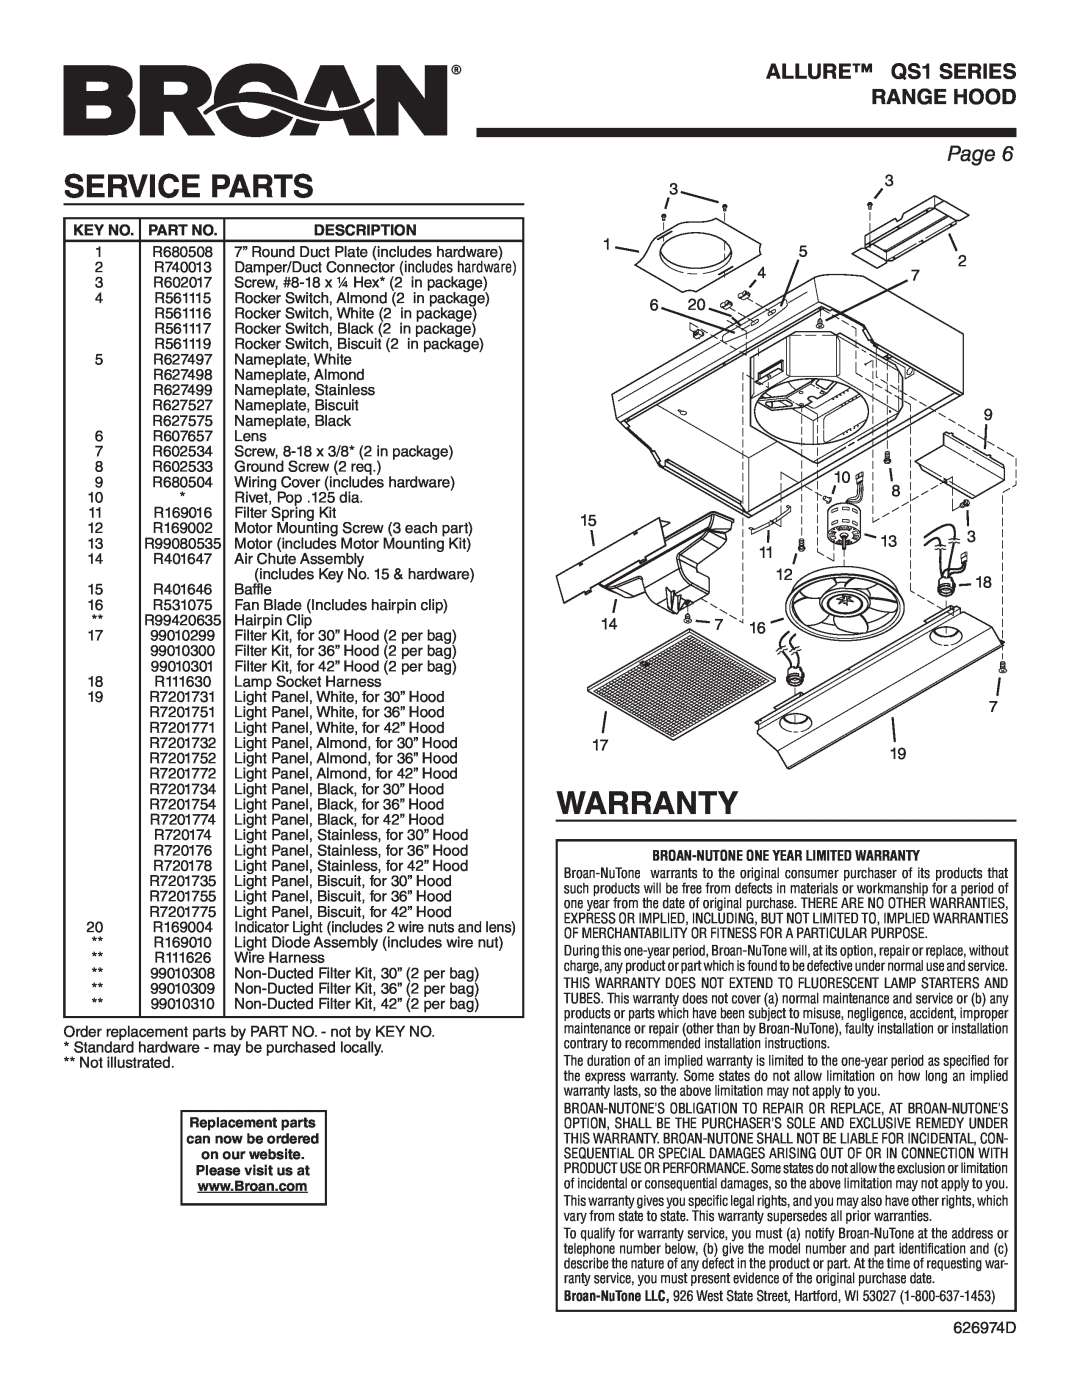 Broan QS130WW warranty Service Parts, Warranty, ALLURE QS1 SERIES RANGE HOOD, Page, Key No. Part No, Description 